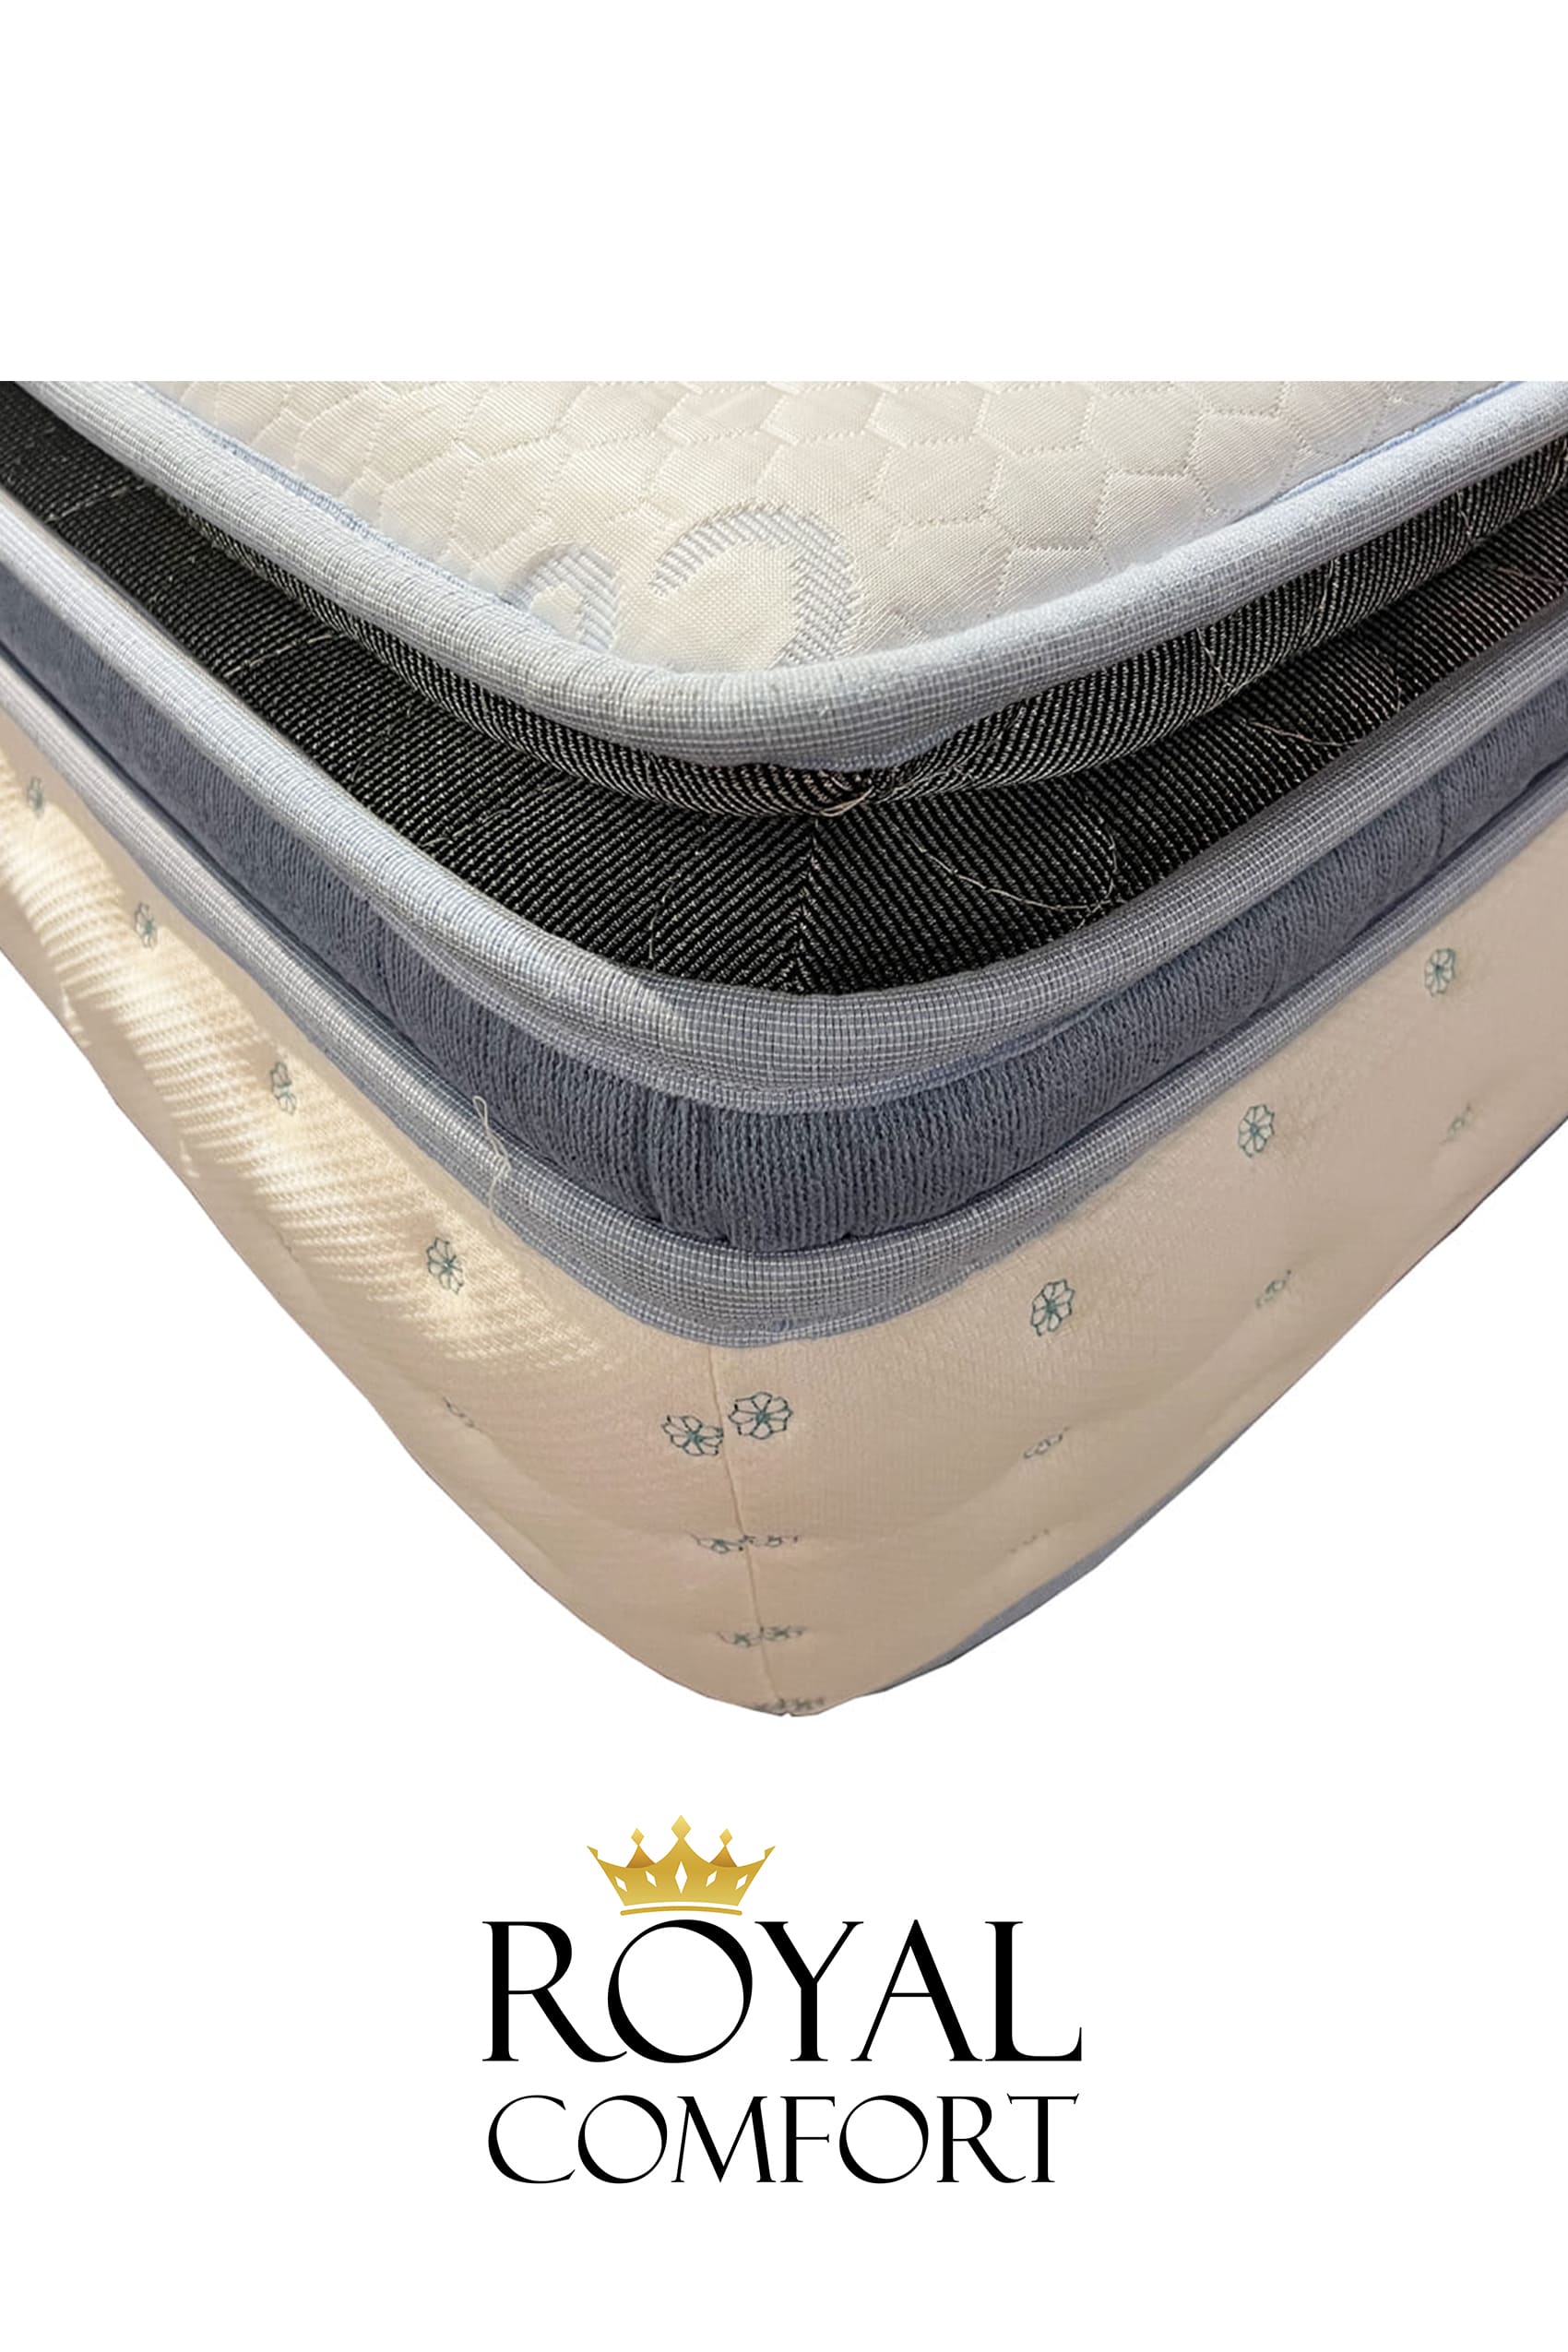 Royal Comfort Pillow Top Mattress